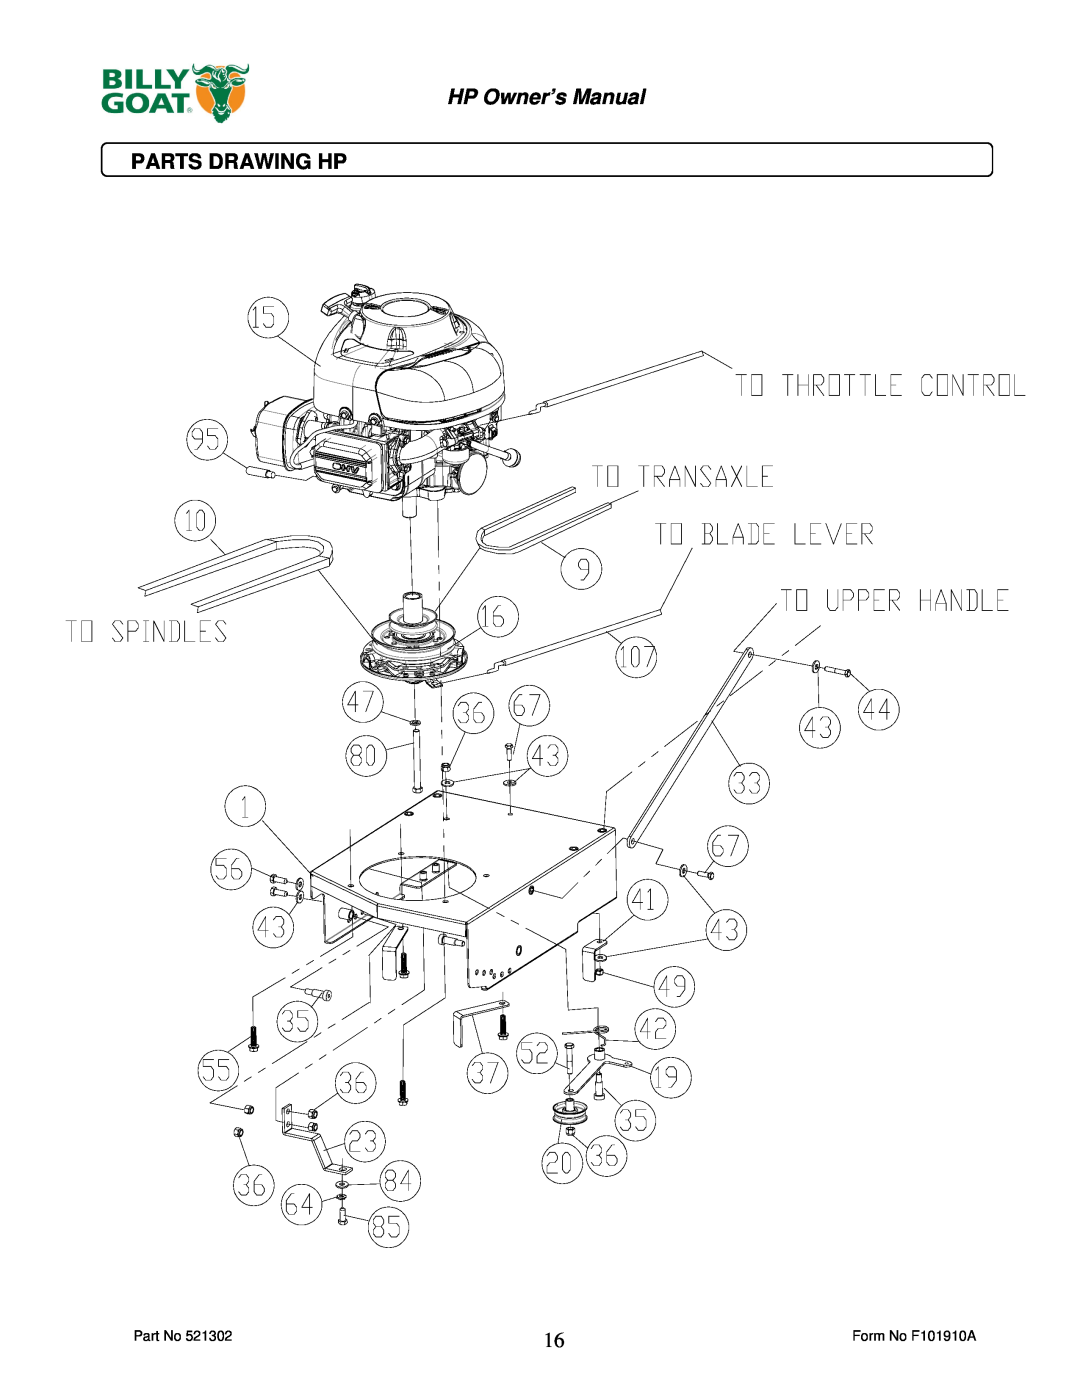 Billy Goat HP3400 owner manual Parts Drawing Hp, HP Owner’s Manual 